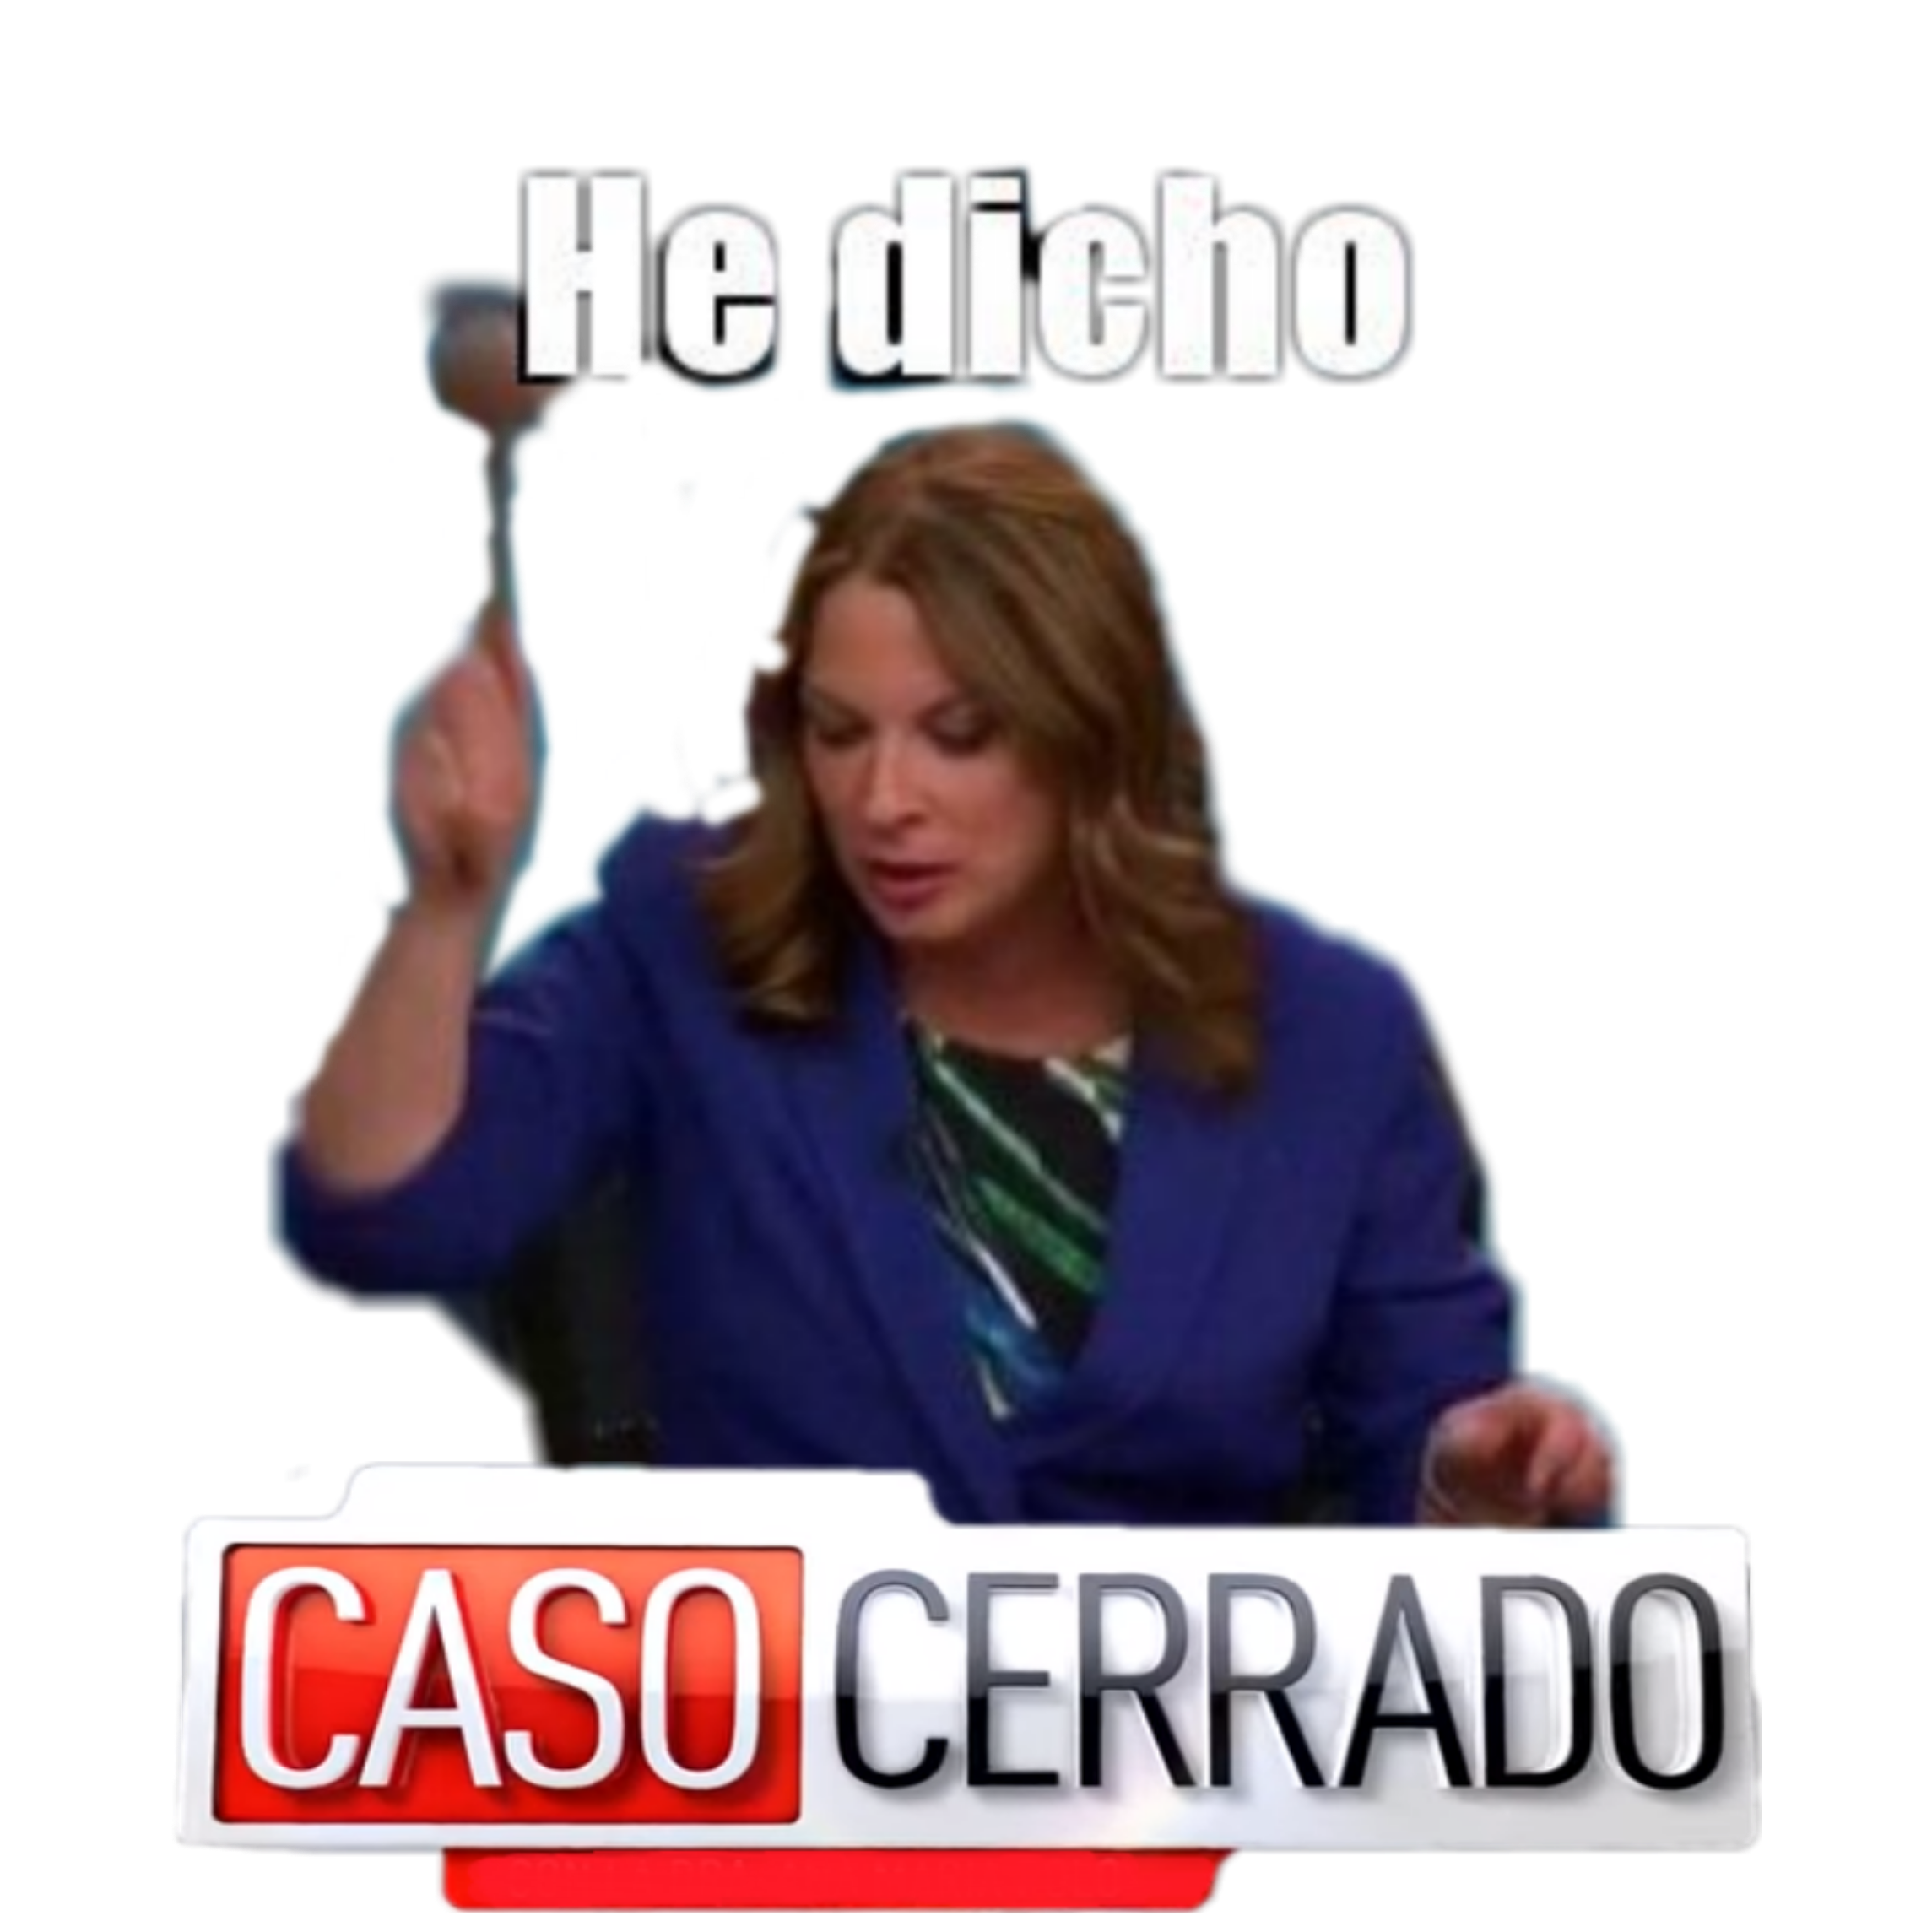 casocerrado freetoedit #casocerrado sticker by @lushy0191.